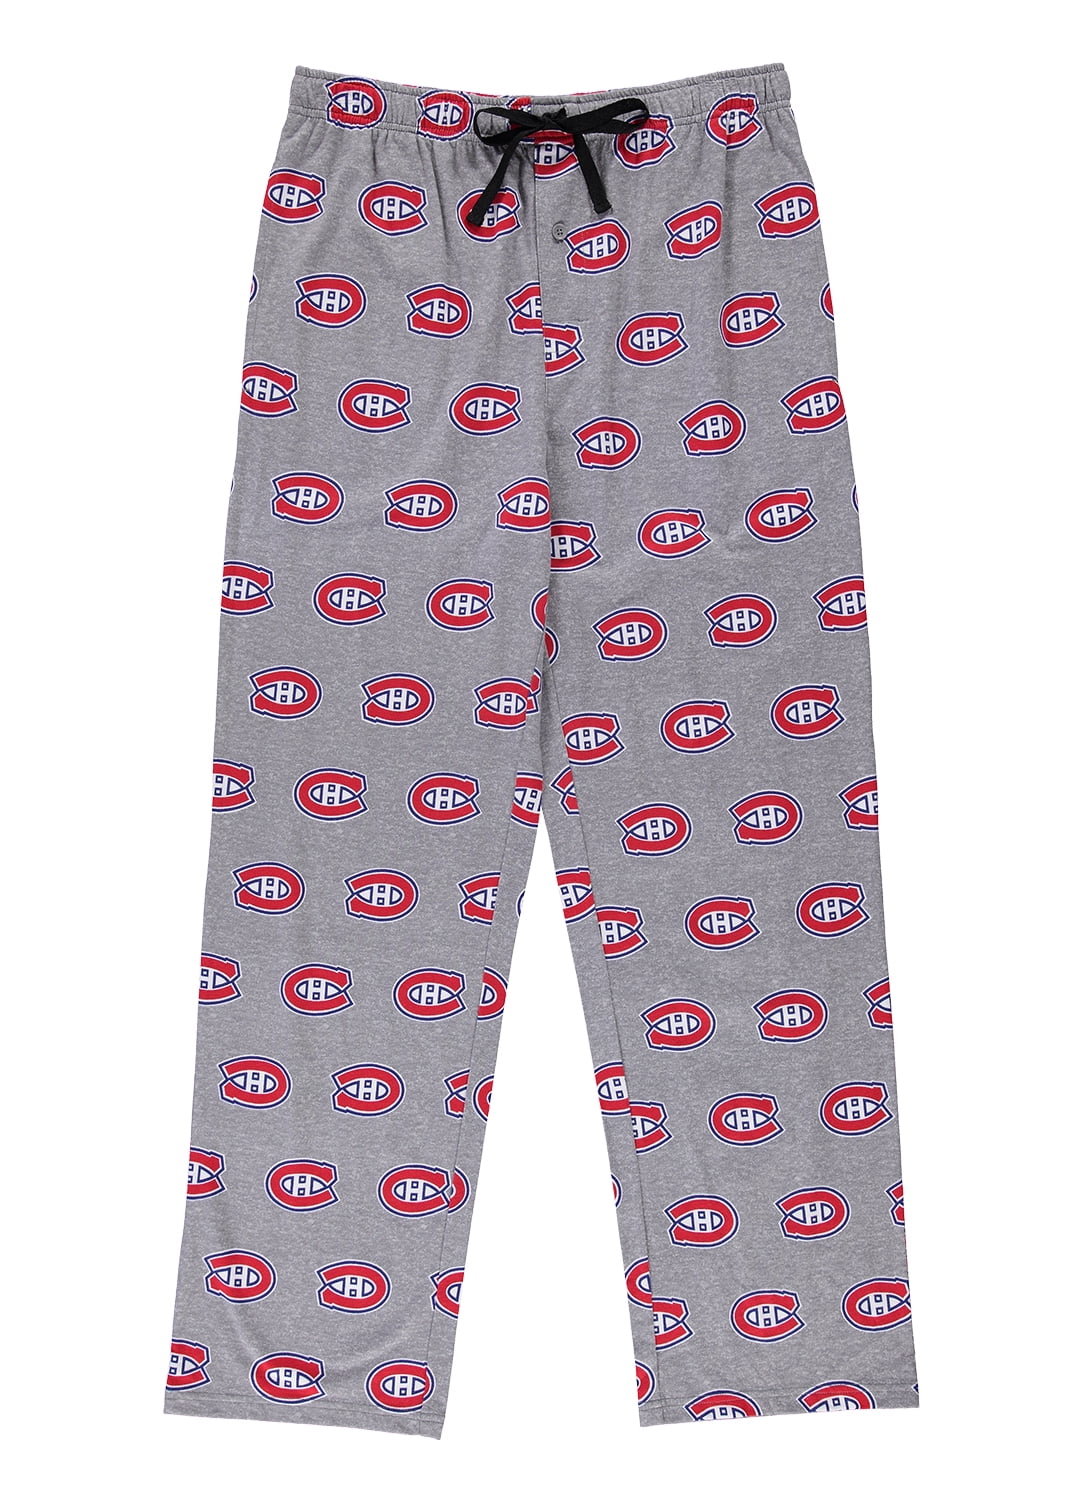 NHL Men's Sleep Pants | Montreal Canadiens Cotton Pajama Bottoms Size S ...